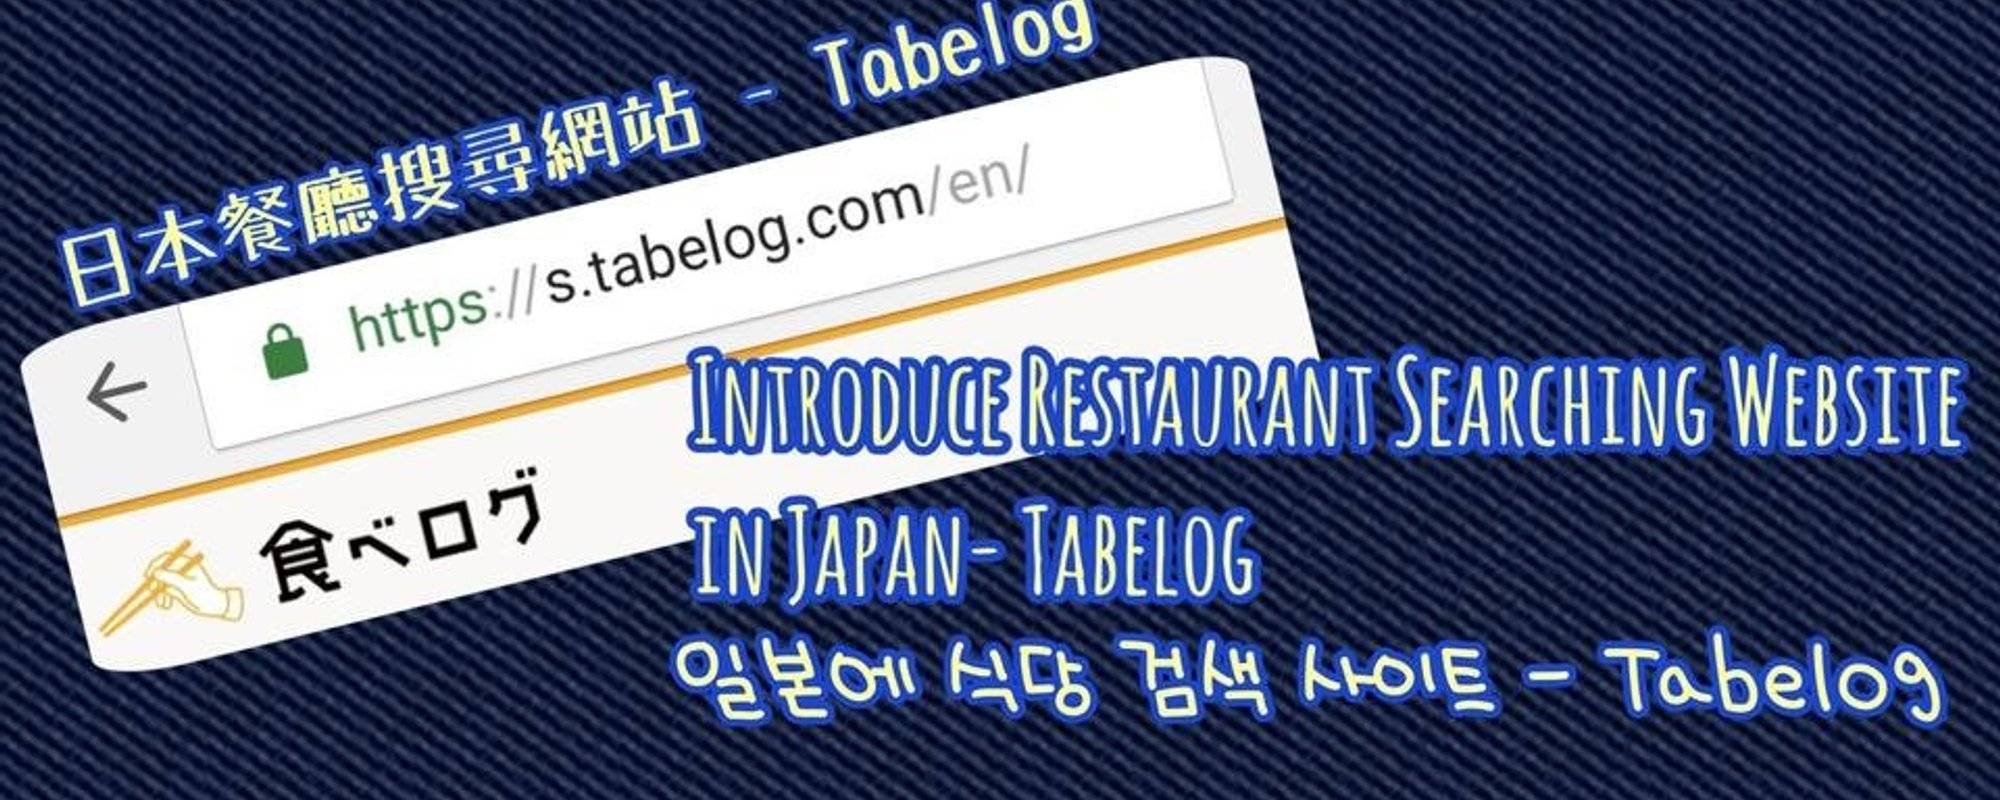 日本的餐廳搜尋網站-Tabelog/Restaurant Searching Website-Tabelog/일본에 식당 검색 사이트-Tabelog ulog#015